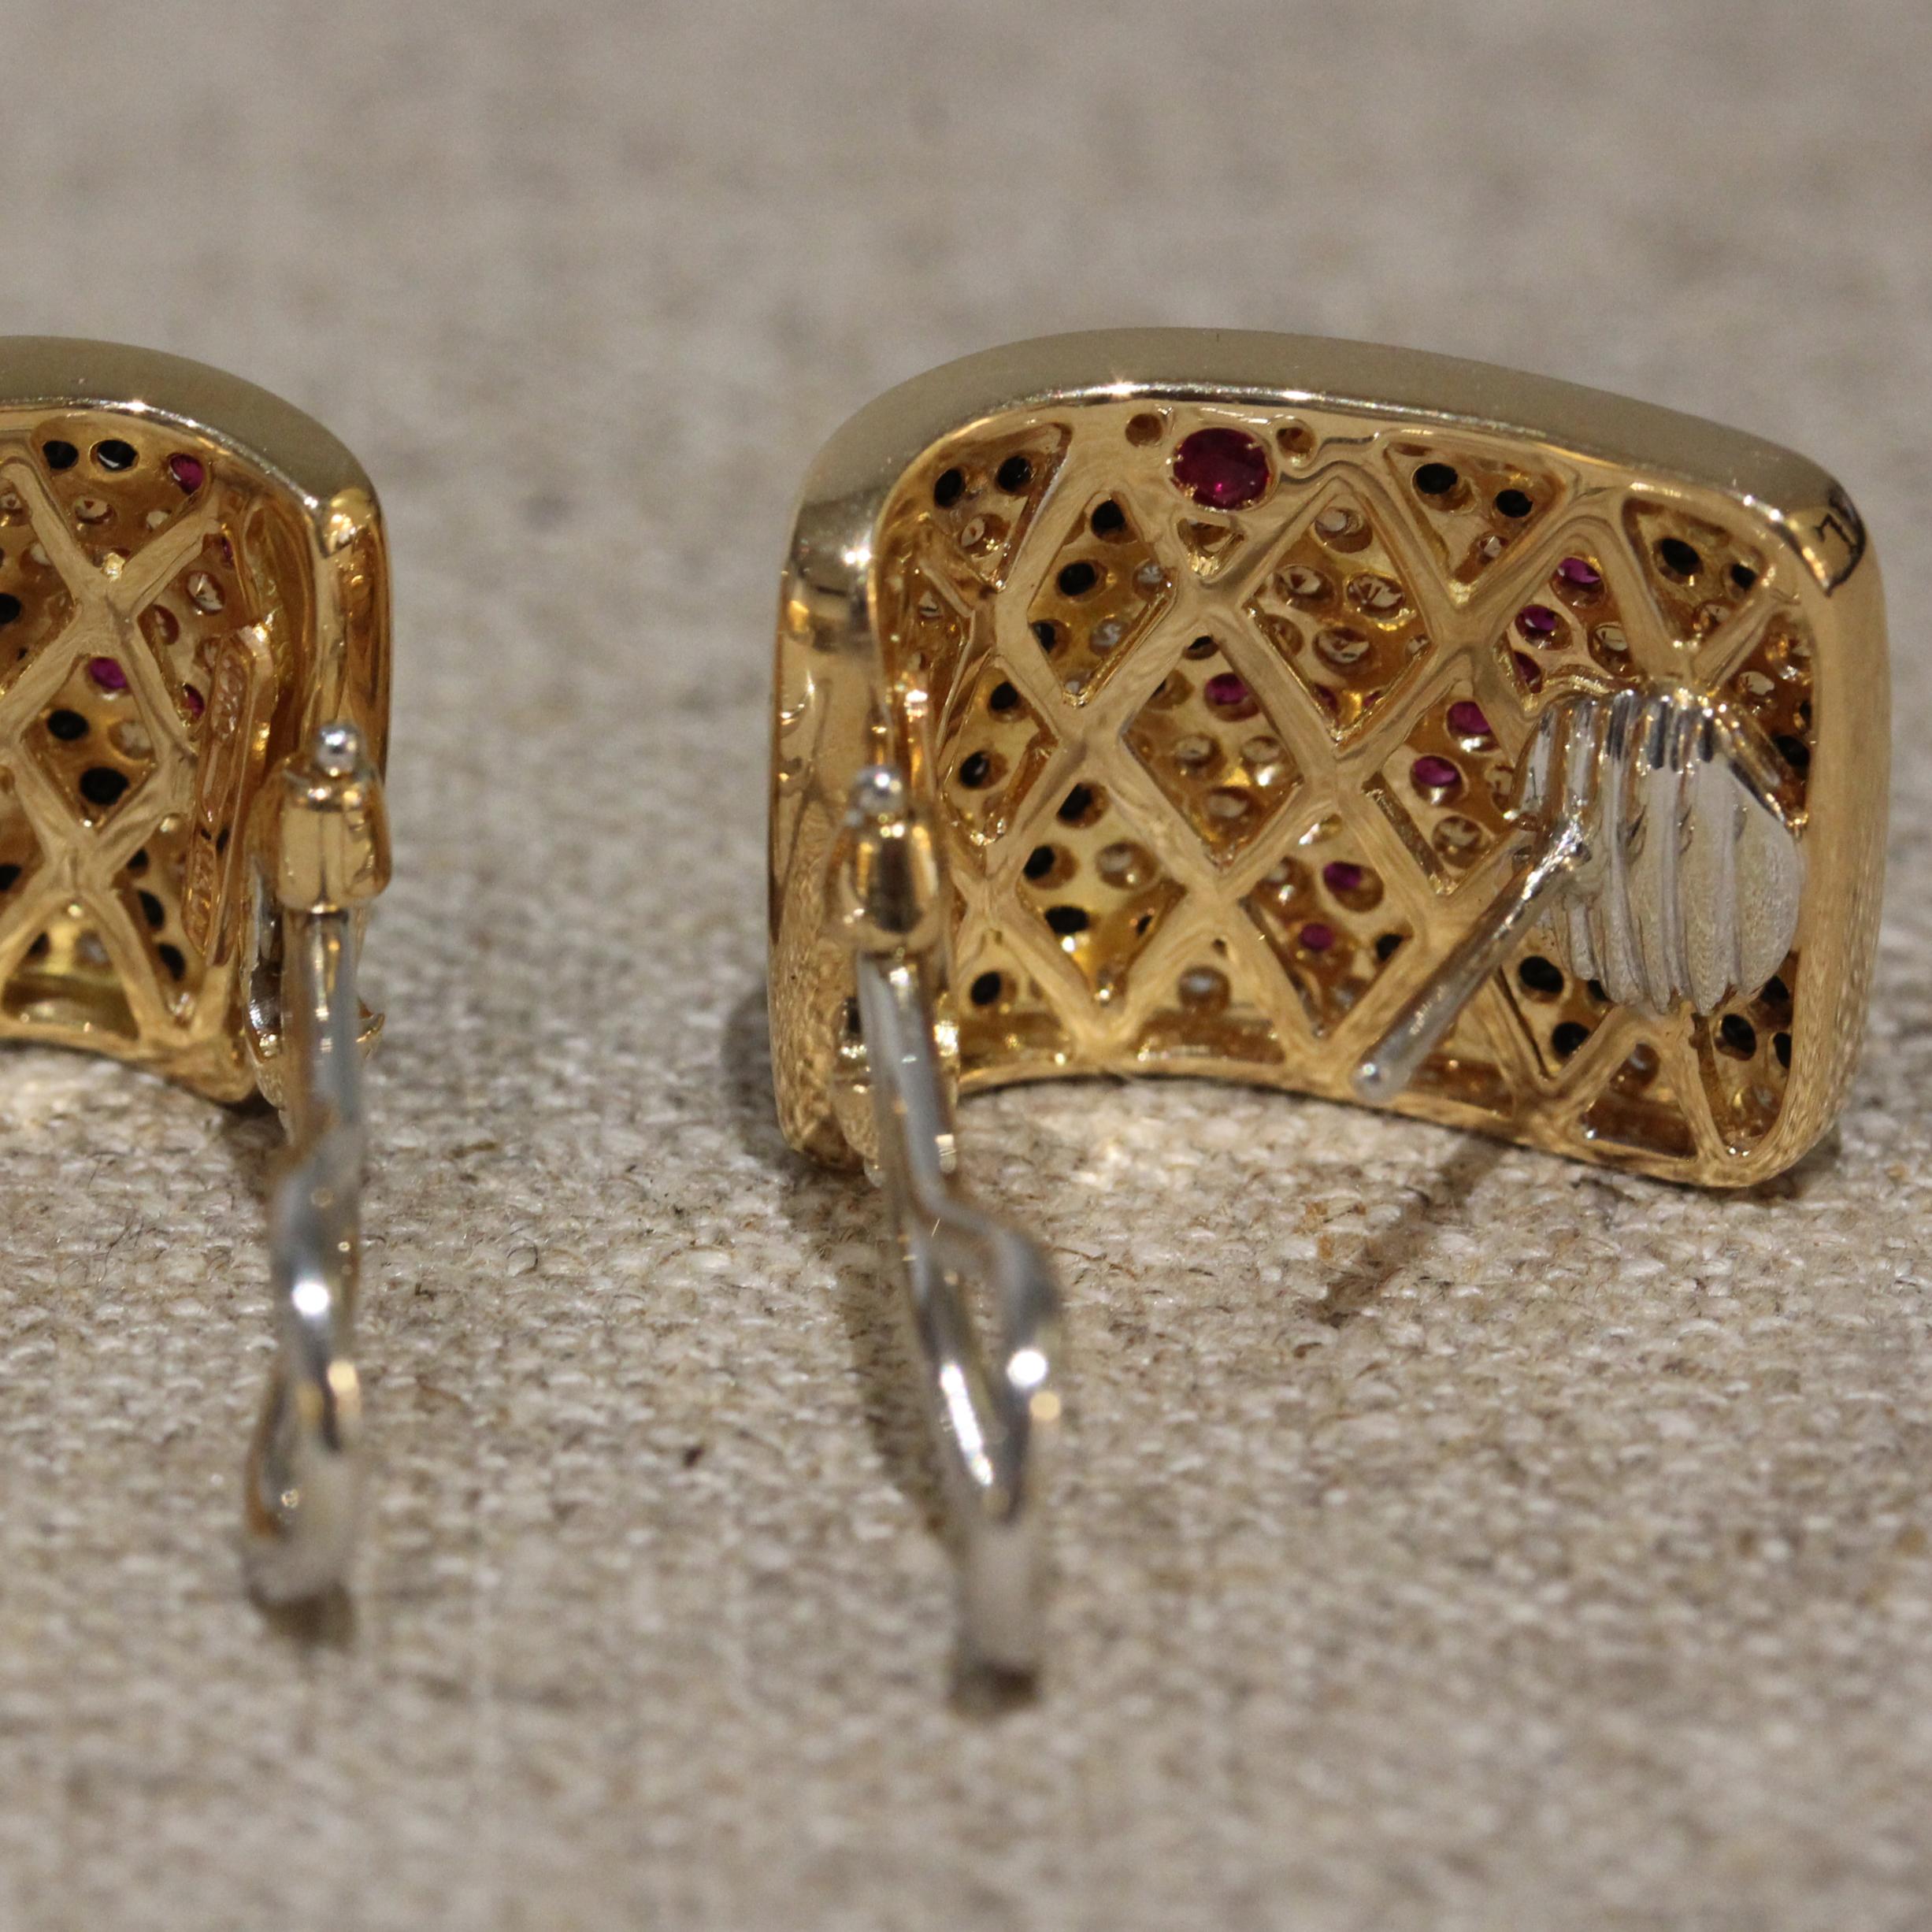 18 karat yellow gold Roberto Coin diamond earrings featuring a Burberry like pattern. 